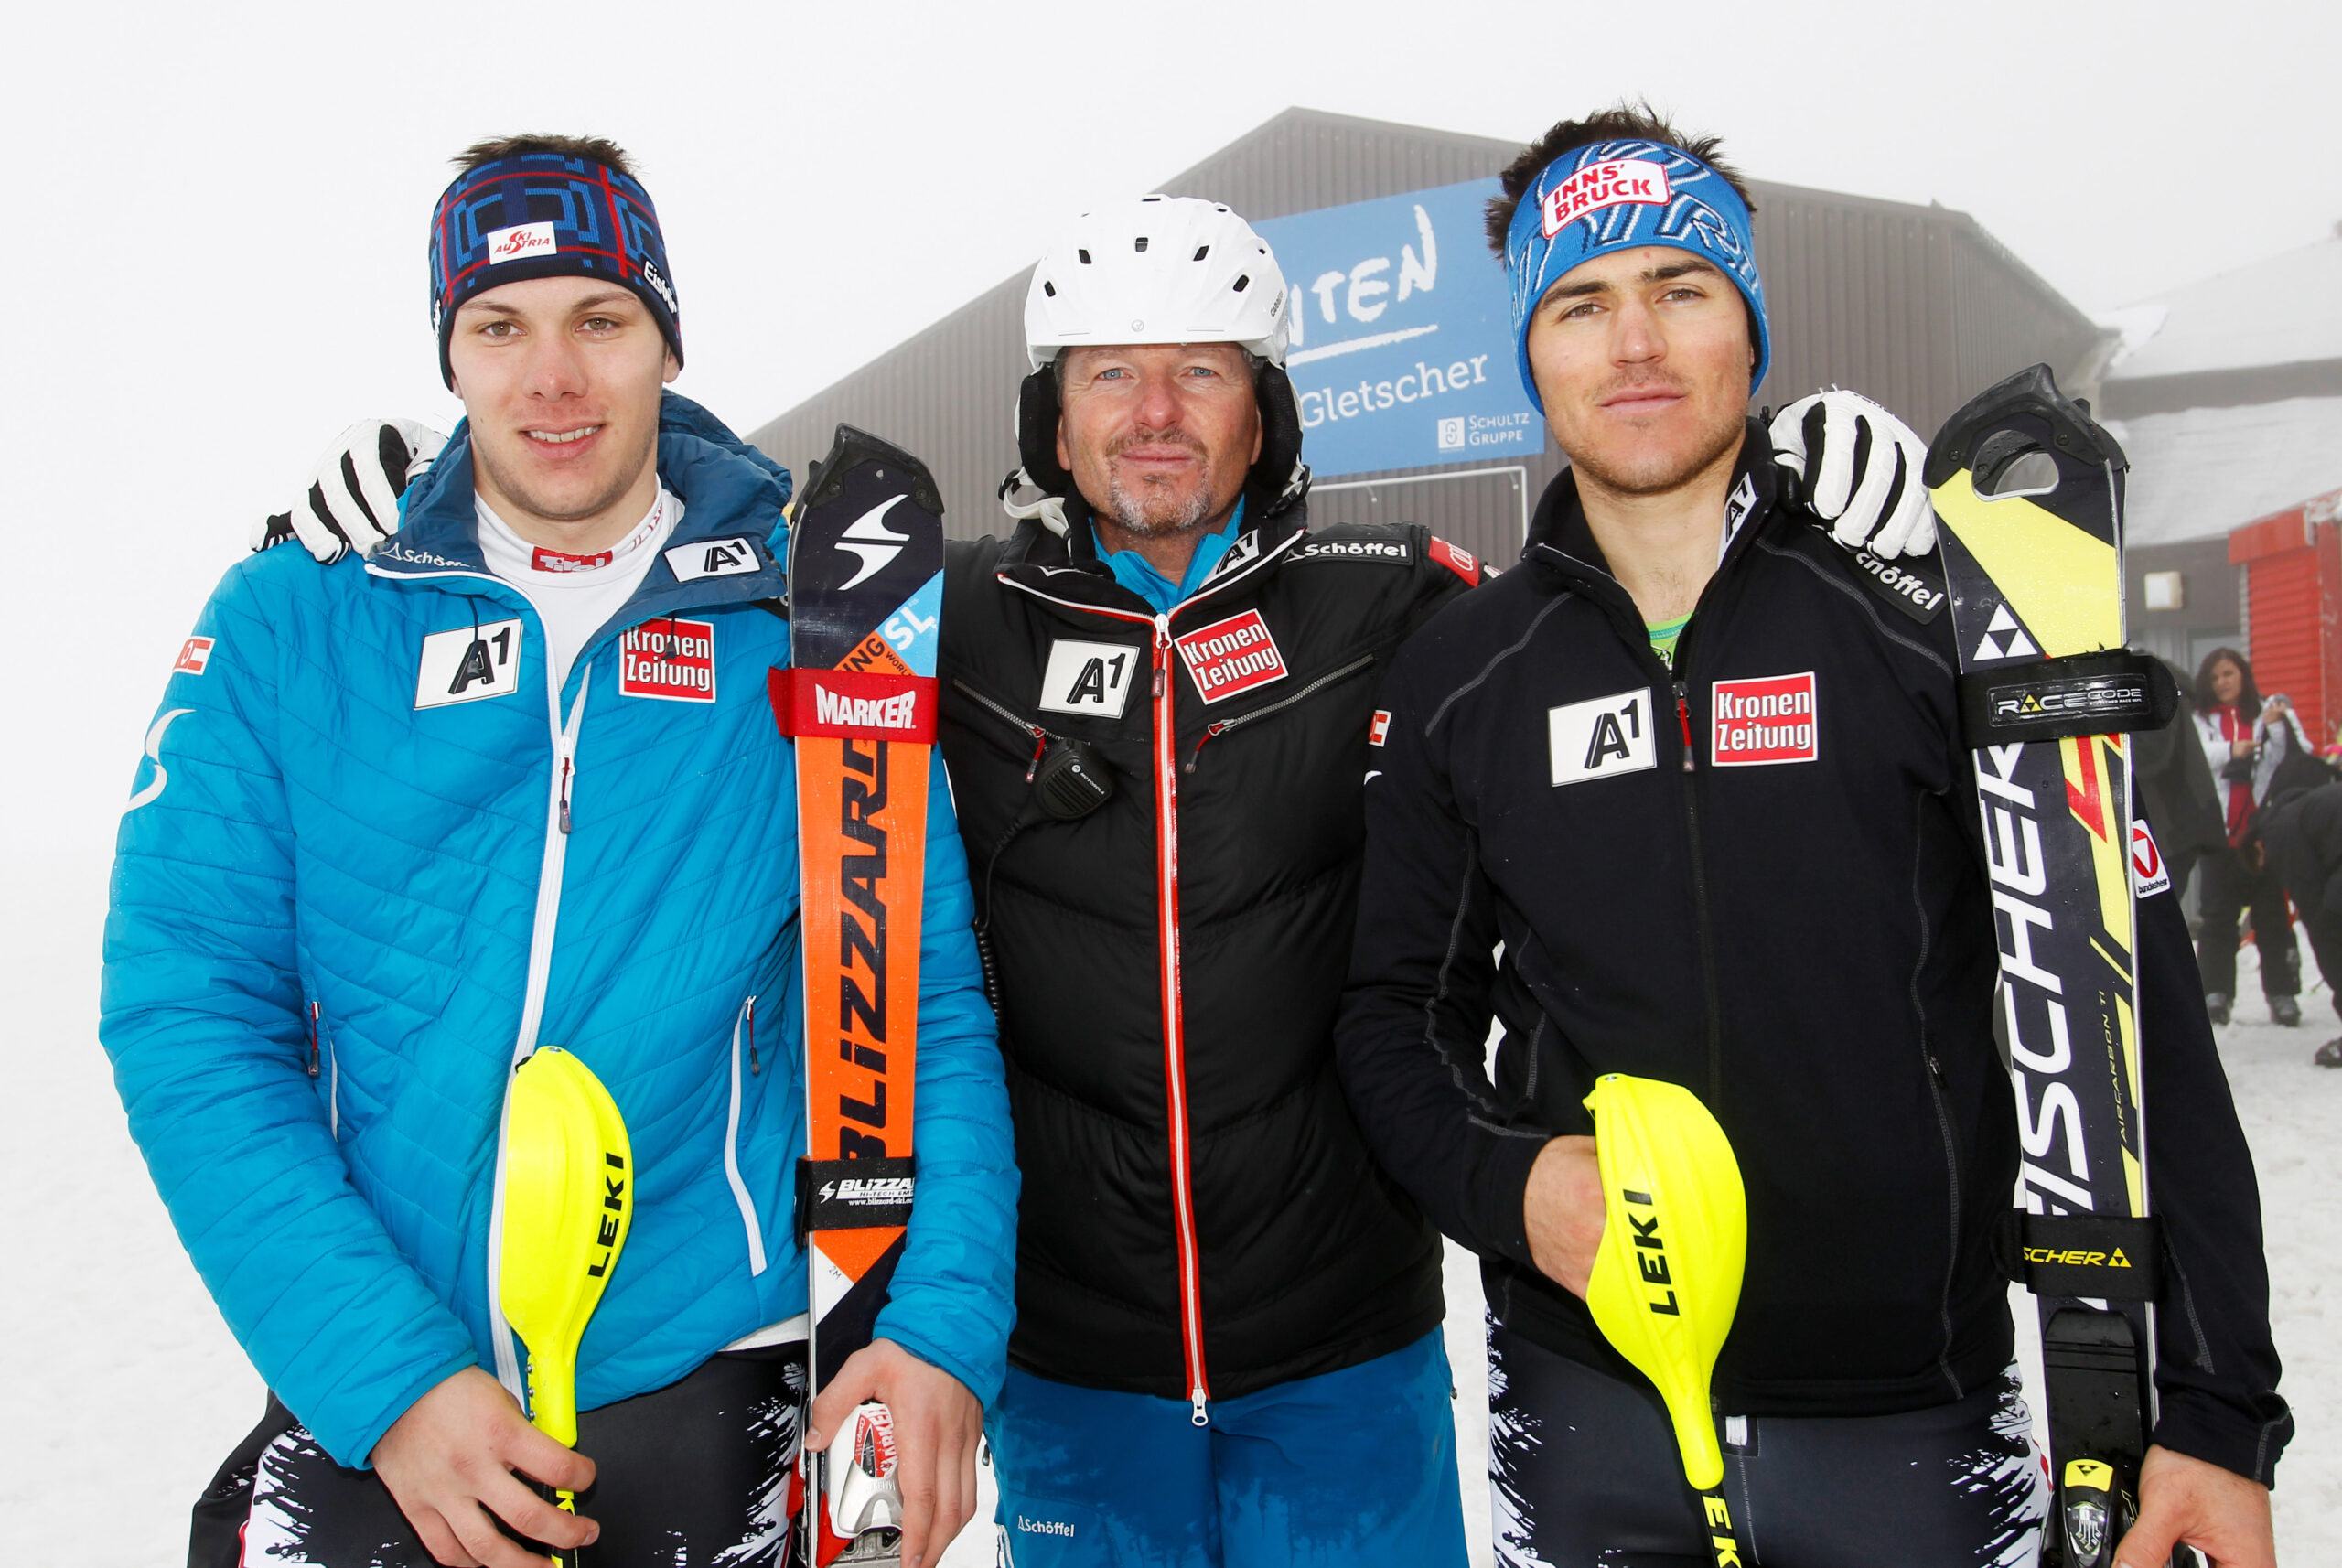 Michael Matt with his brothers (Source: Ski Racing Media)